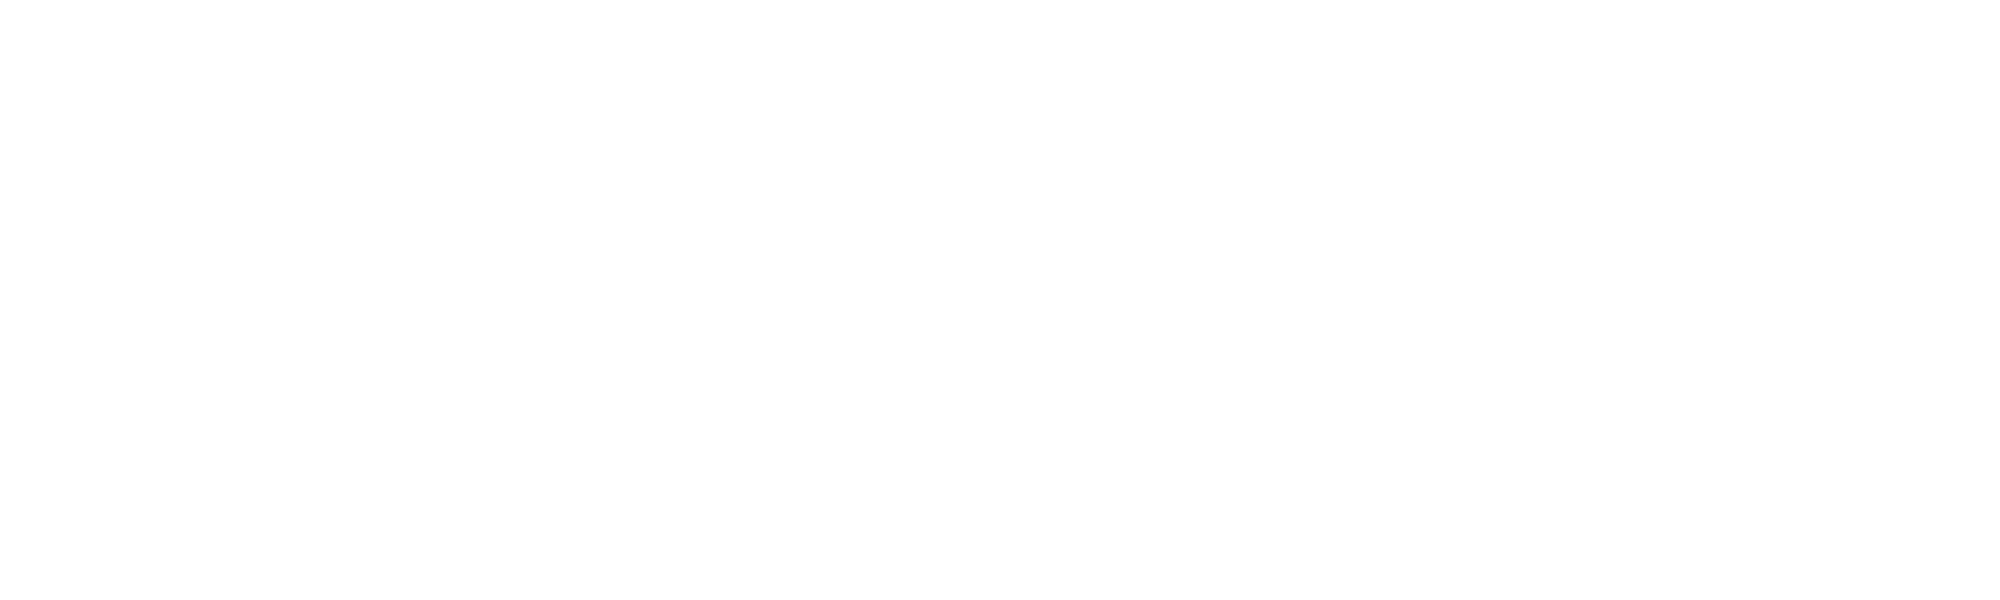 mehtahospitals